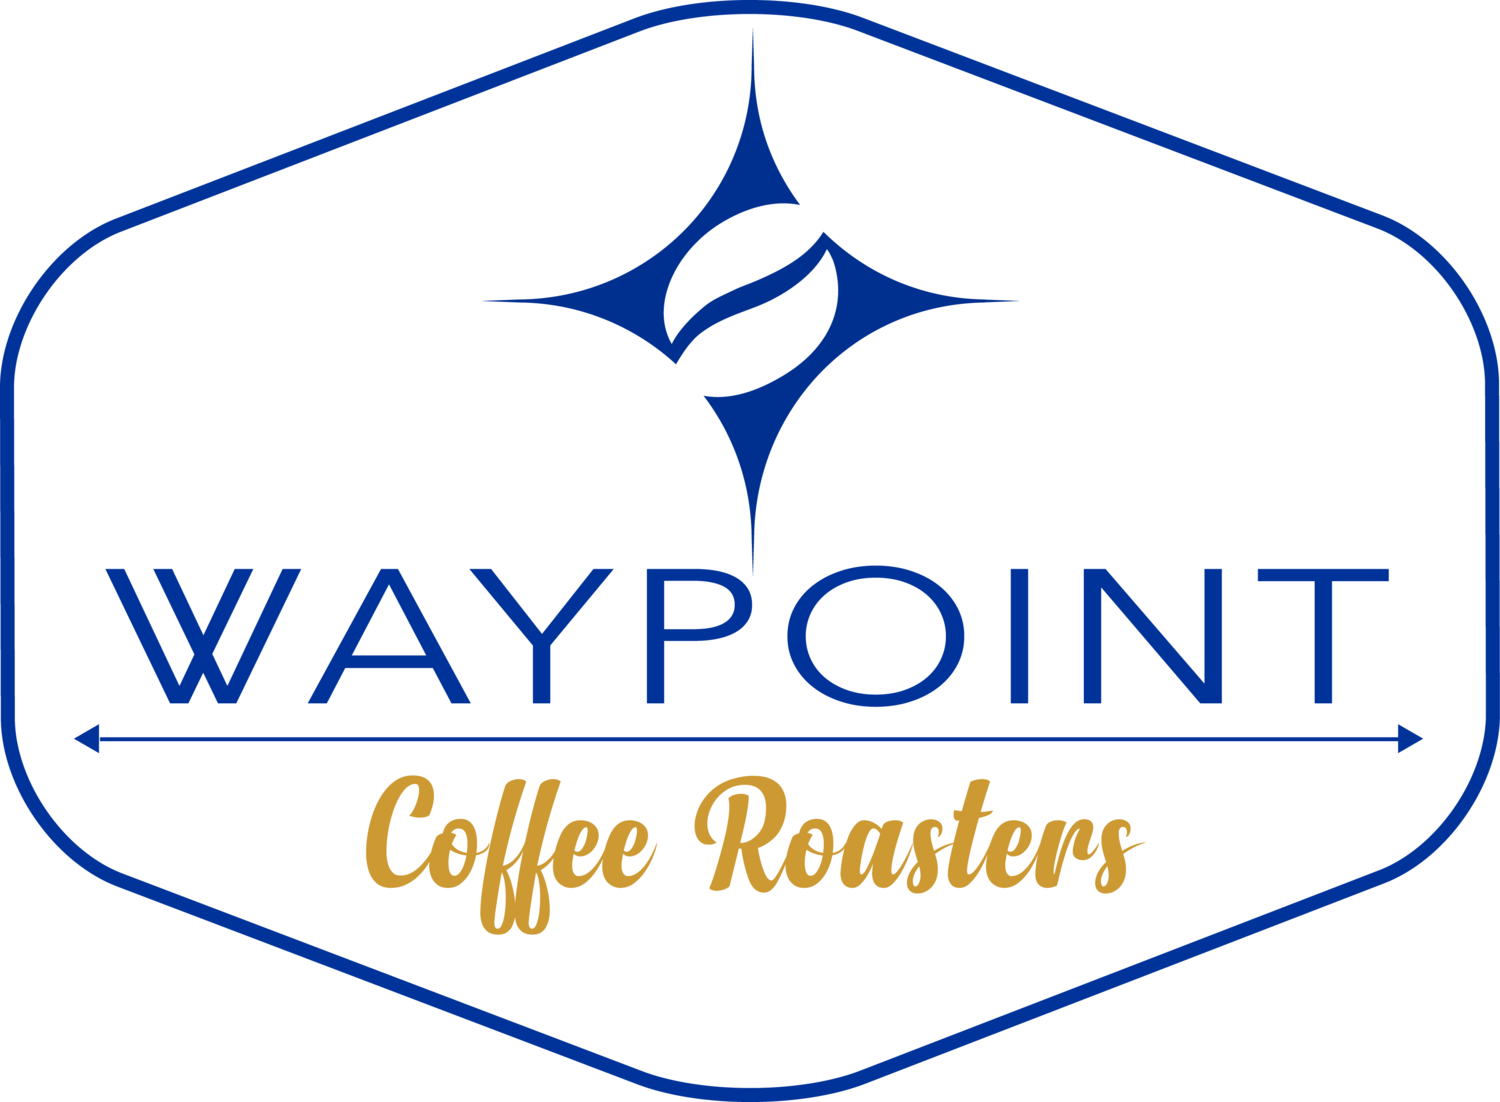 WAYPOINT COFFEE ROASTERS